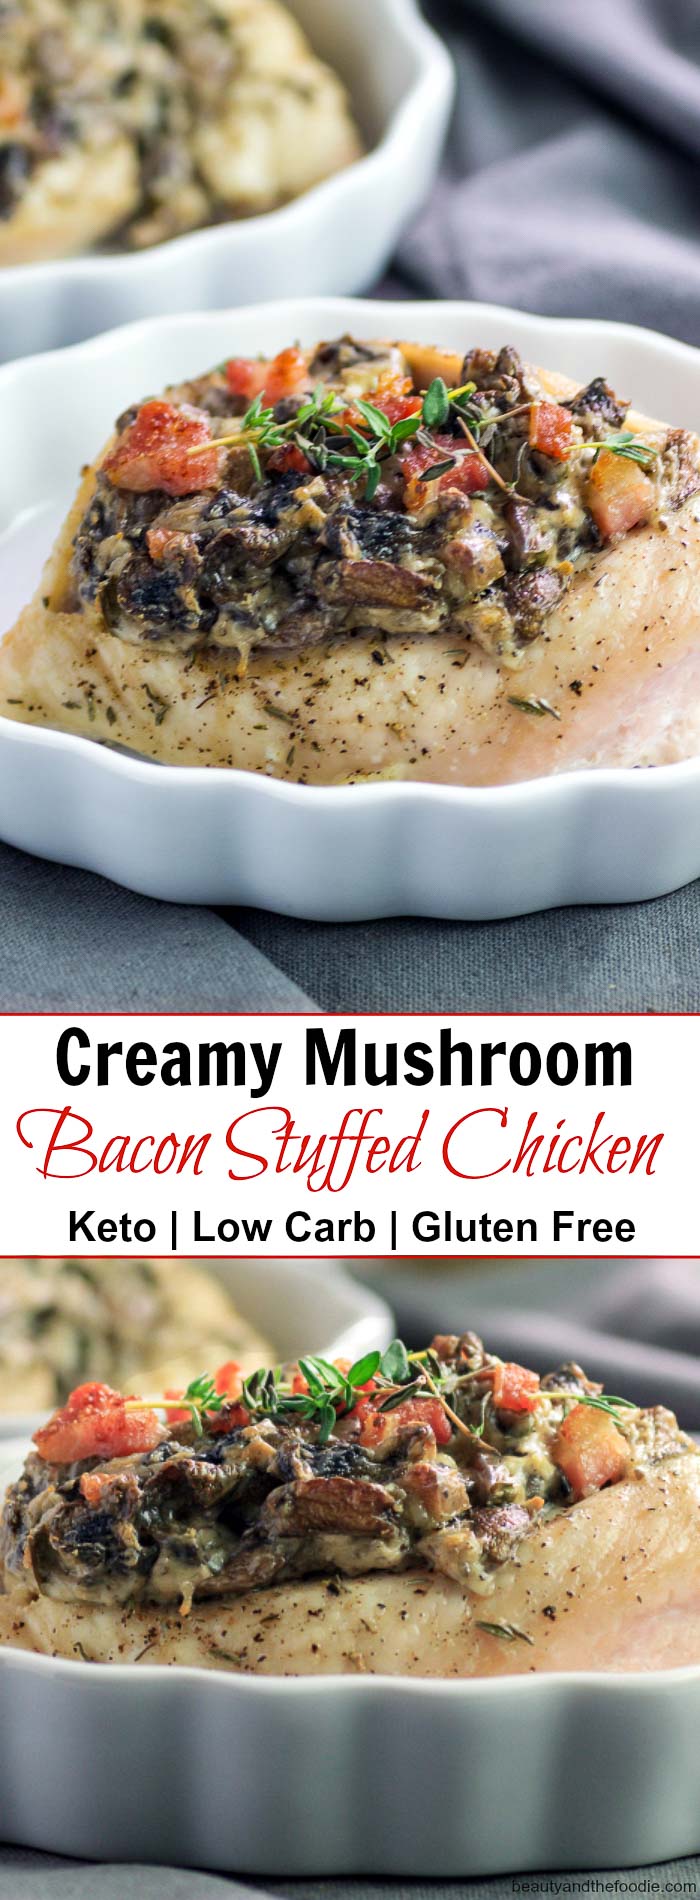 Creamy Mushroom Bacon Stuffed Chicken- Low Carb, Keto, And Gluten Free